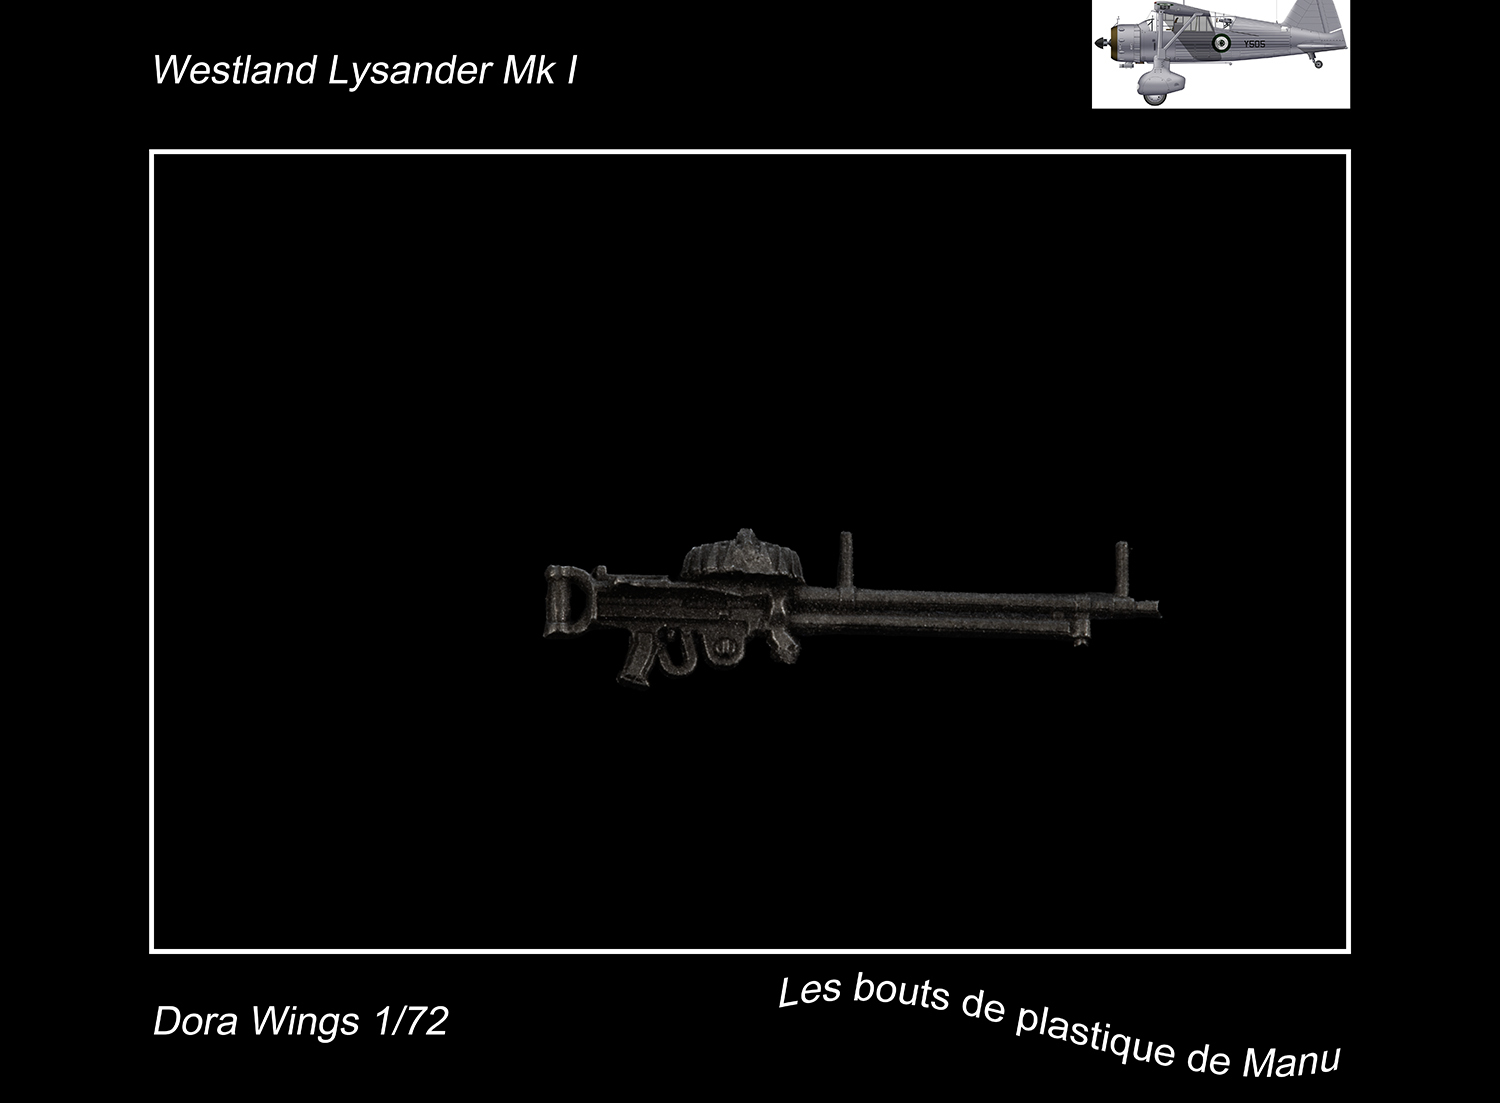 [Dora Wings] Westland Lysander Mk I - Je préfère en rire... - Page 4 Bdvy